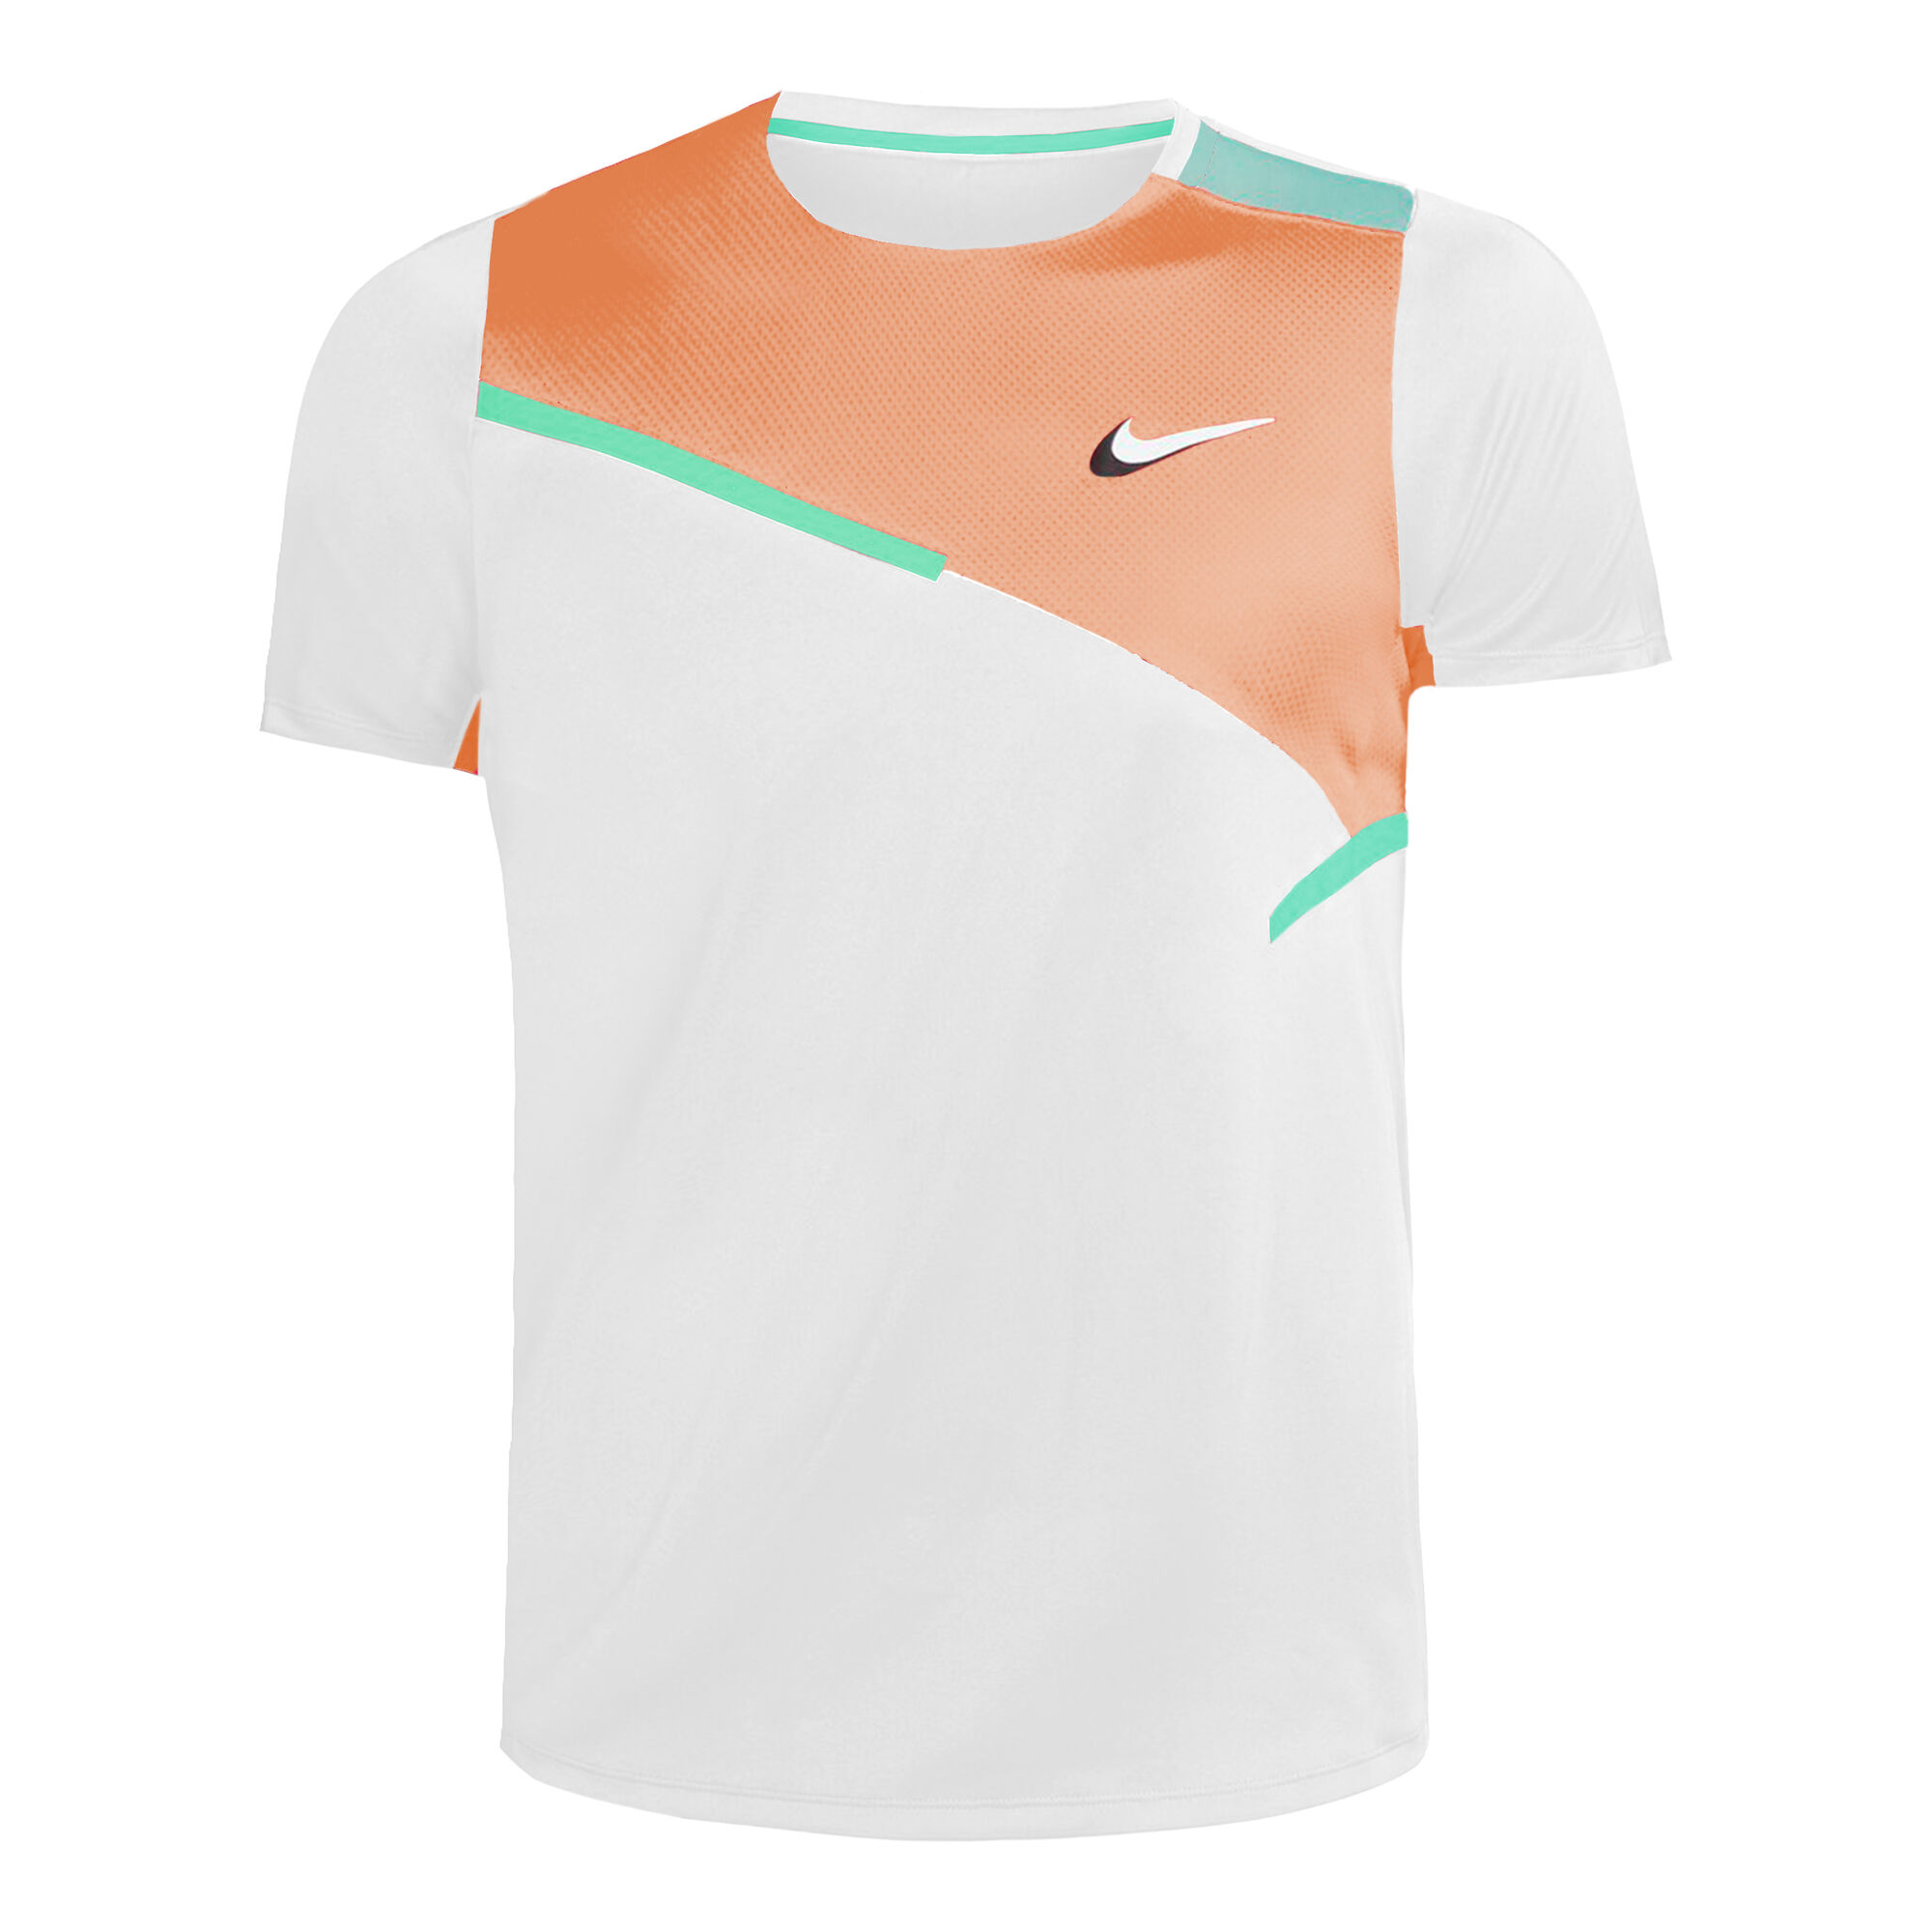 Nike Dry Camiseta Manga Corta Hombres - Blanco, Naranja compra online | Tennis-Point